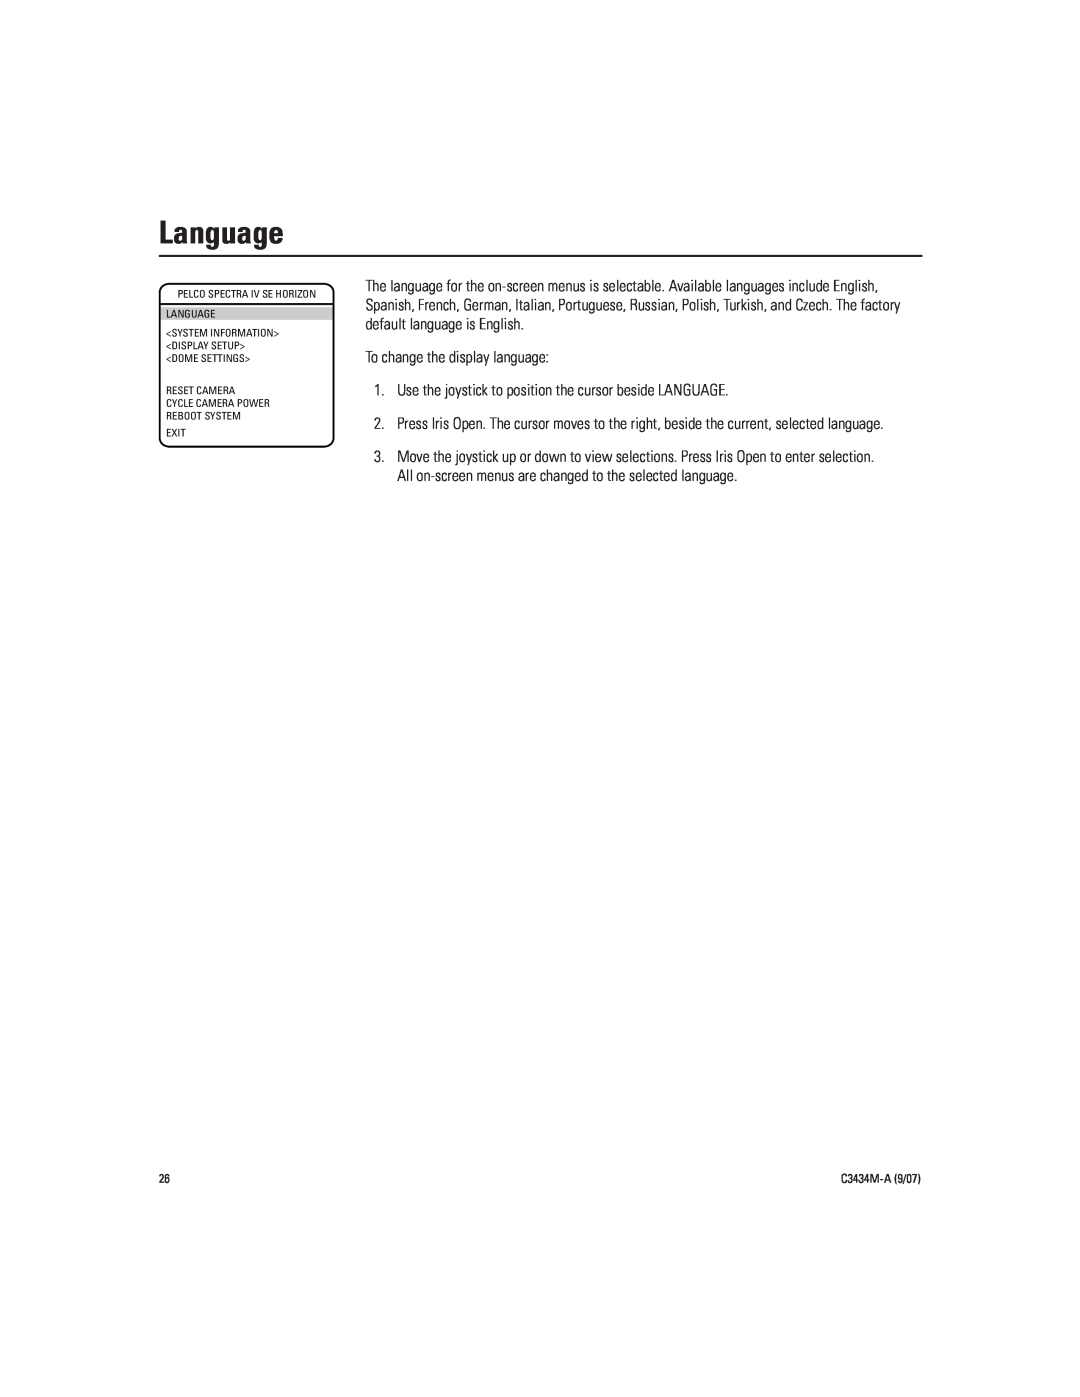 Pelco IV SE manual Language 